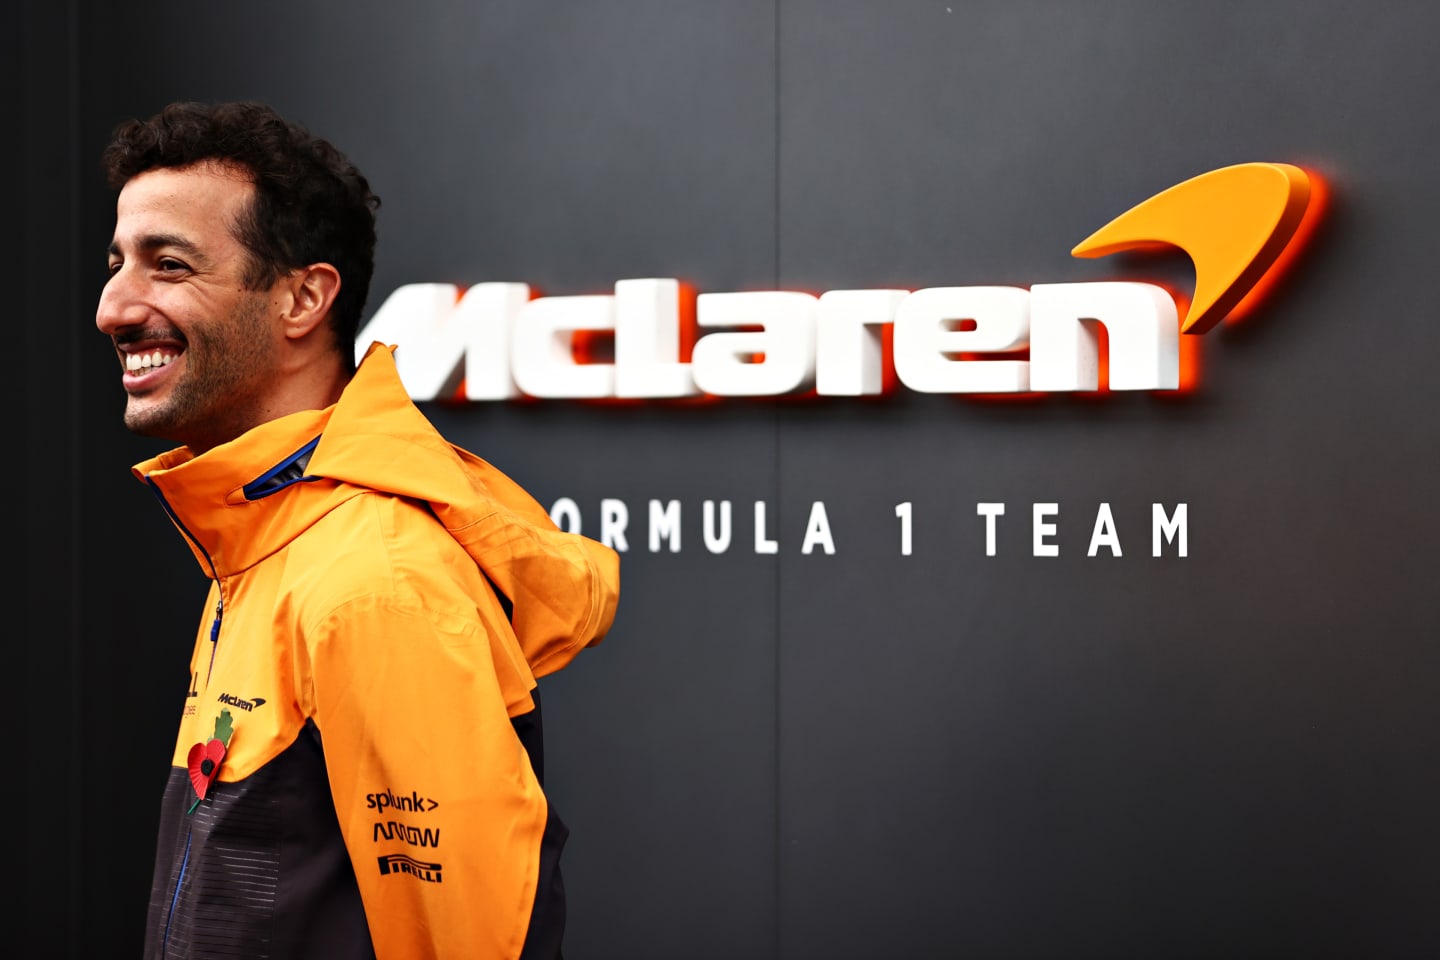 SAO PAULO, BRAZIL - NOVEMBER 13: Daniel Ricciardo of Australia and McLaren F1 looks on in the Paddock before practice ahead of the F1 Grand Prix of Brazil at Autodromo Jose Carlos Pace on November 13, 2021 in Sao Paulo, Brazil. (Photo by Mark Thompson/Getty Images)